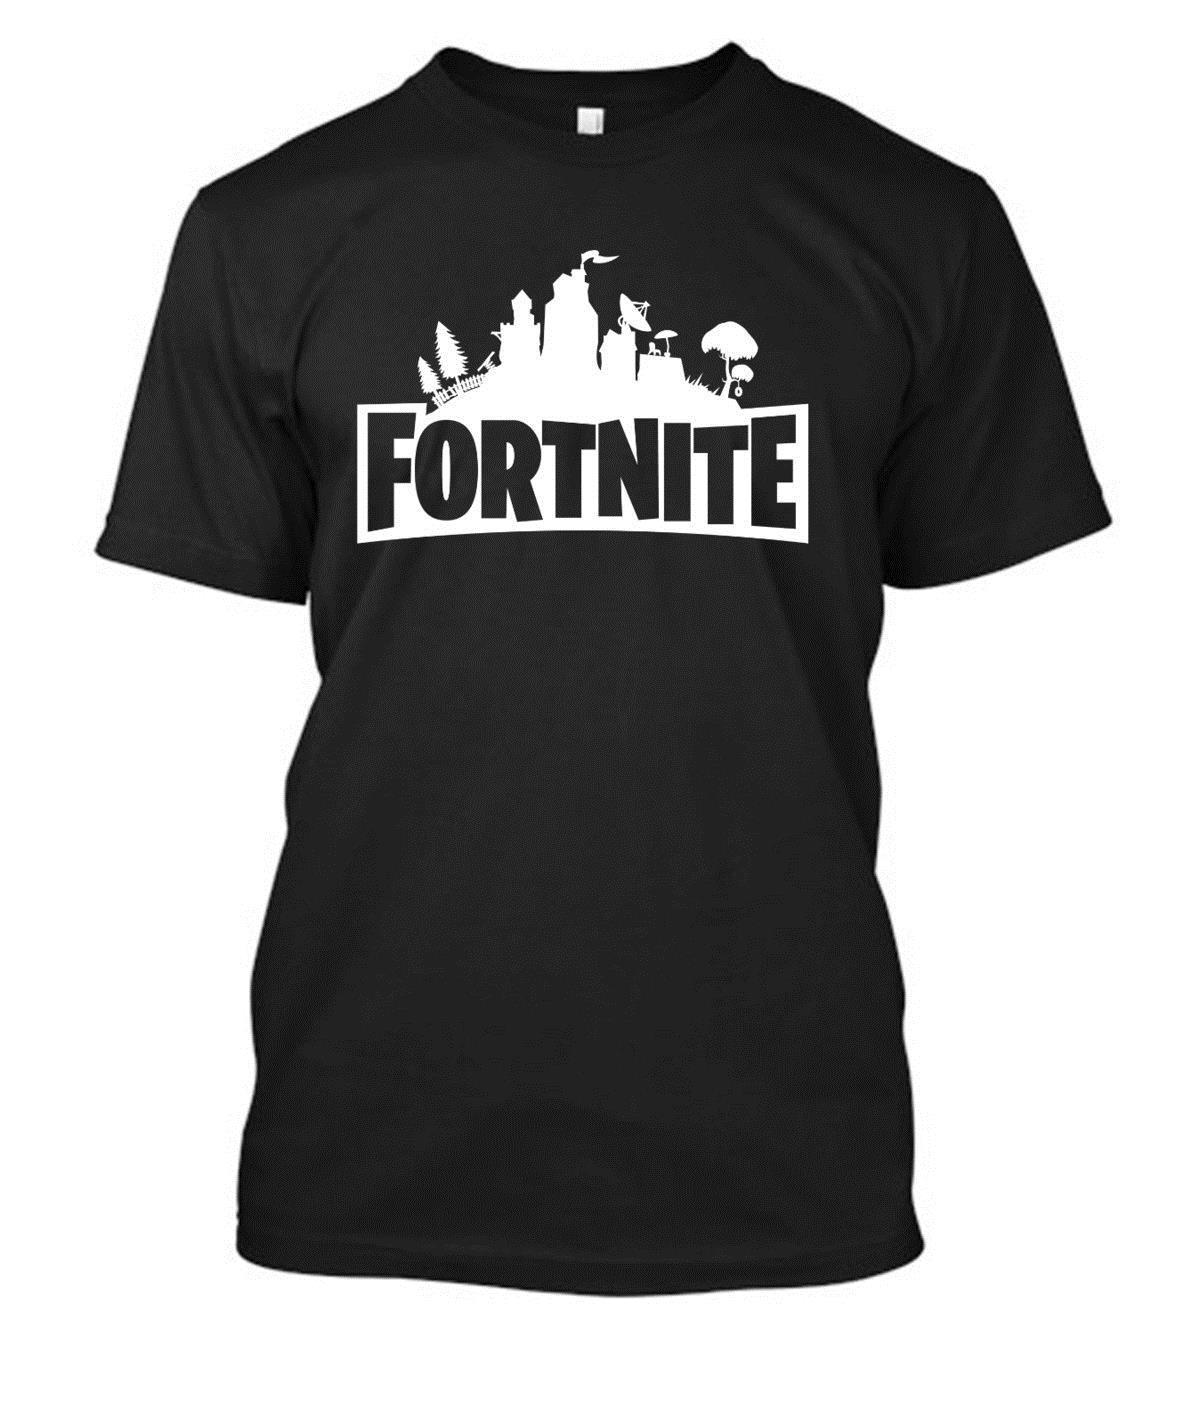 Fortnite Battle Royale Logo - PERSONALISED Fortnite Battle Royale Logo Game T Shirt Tee Shirt